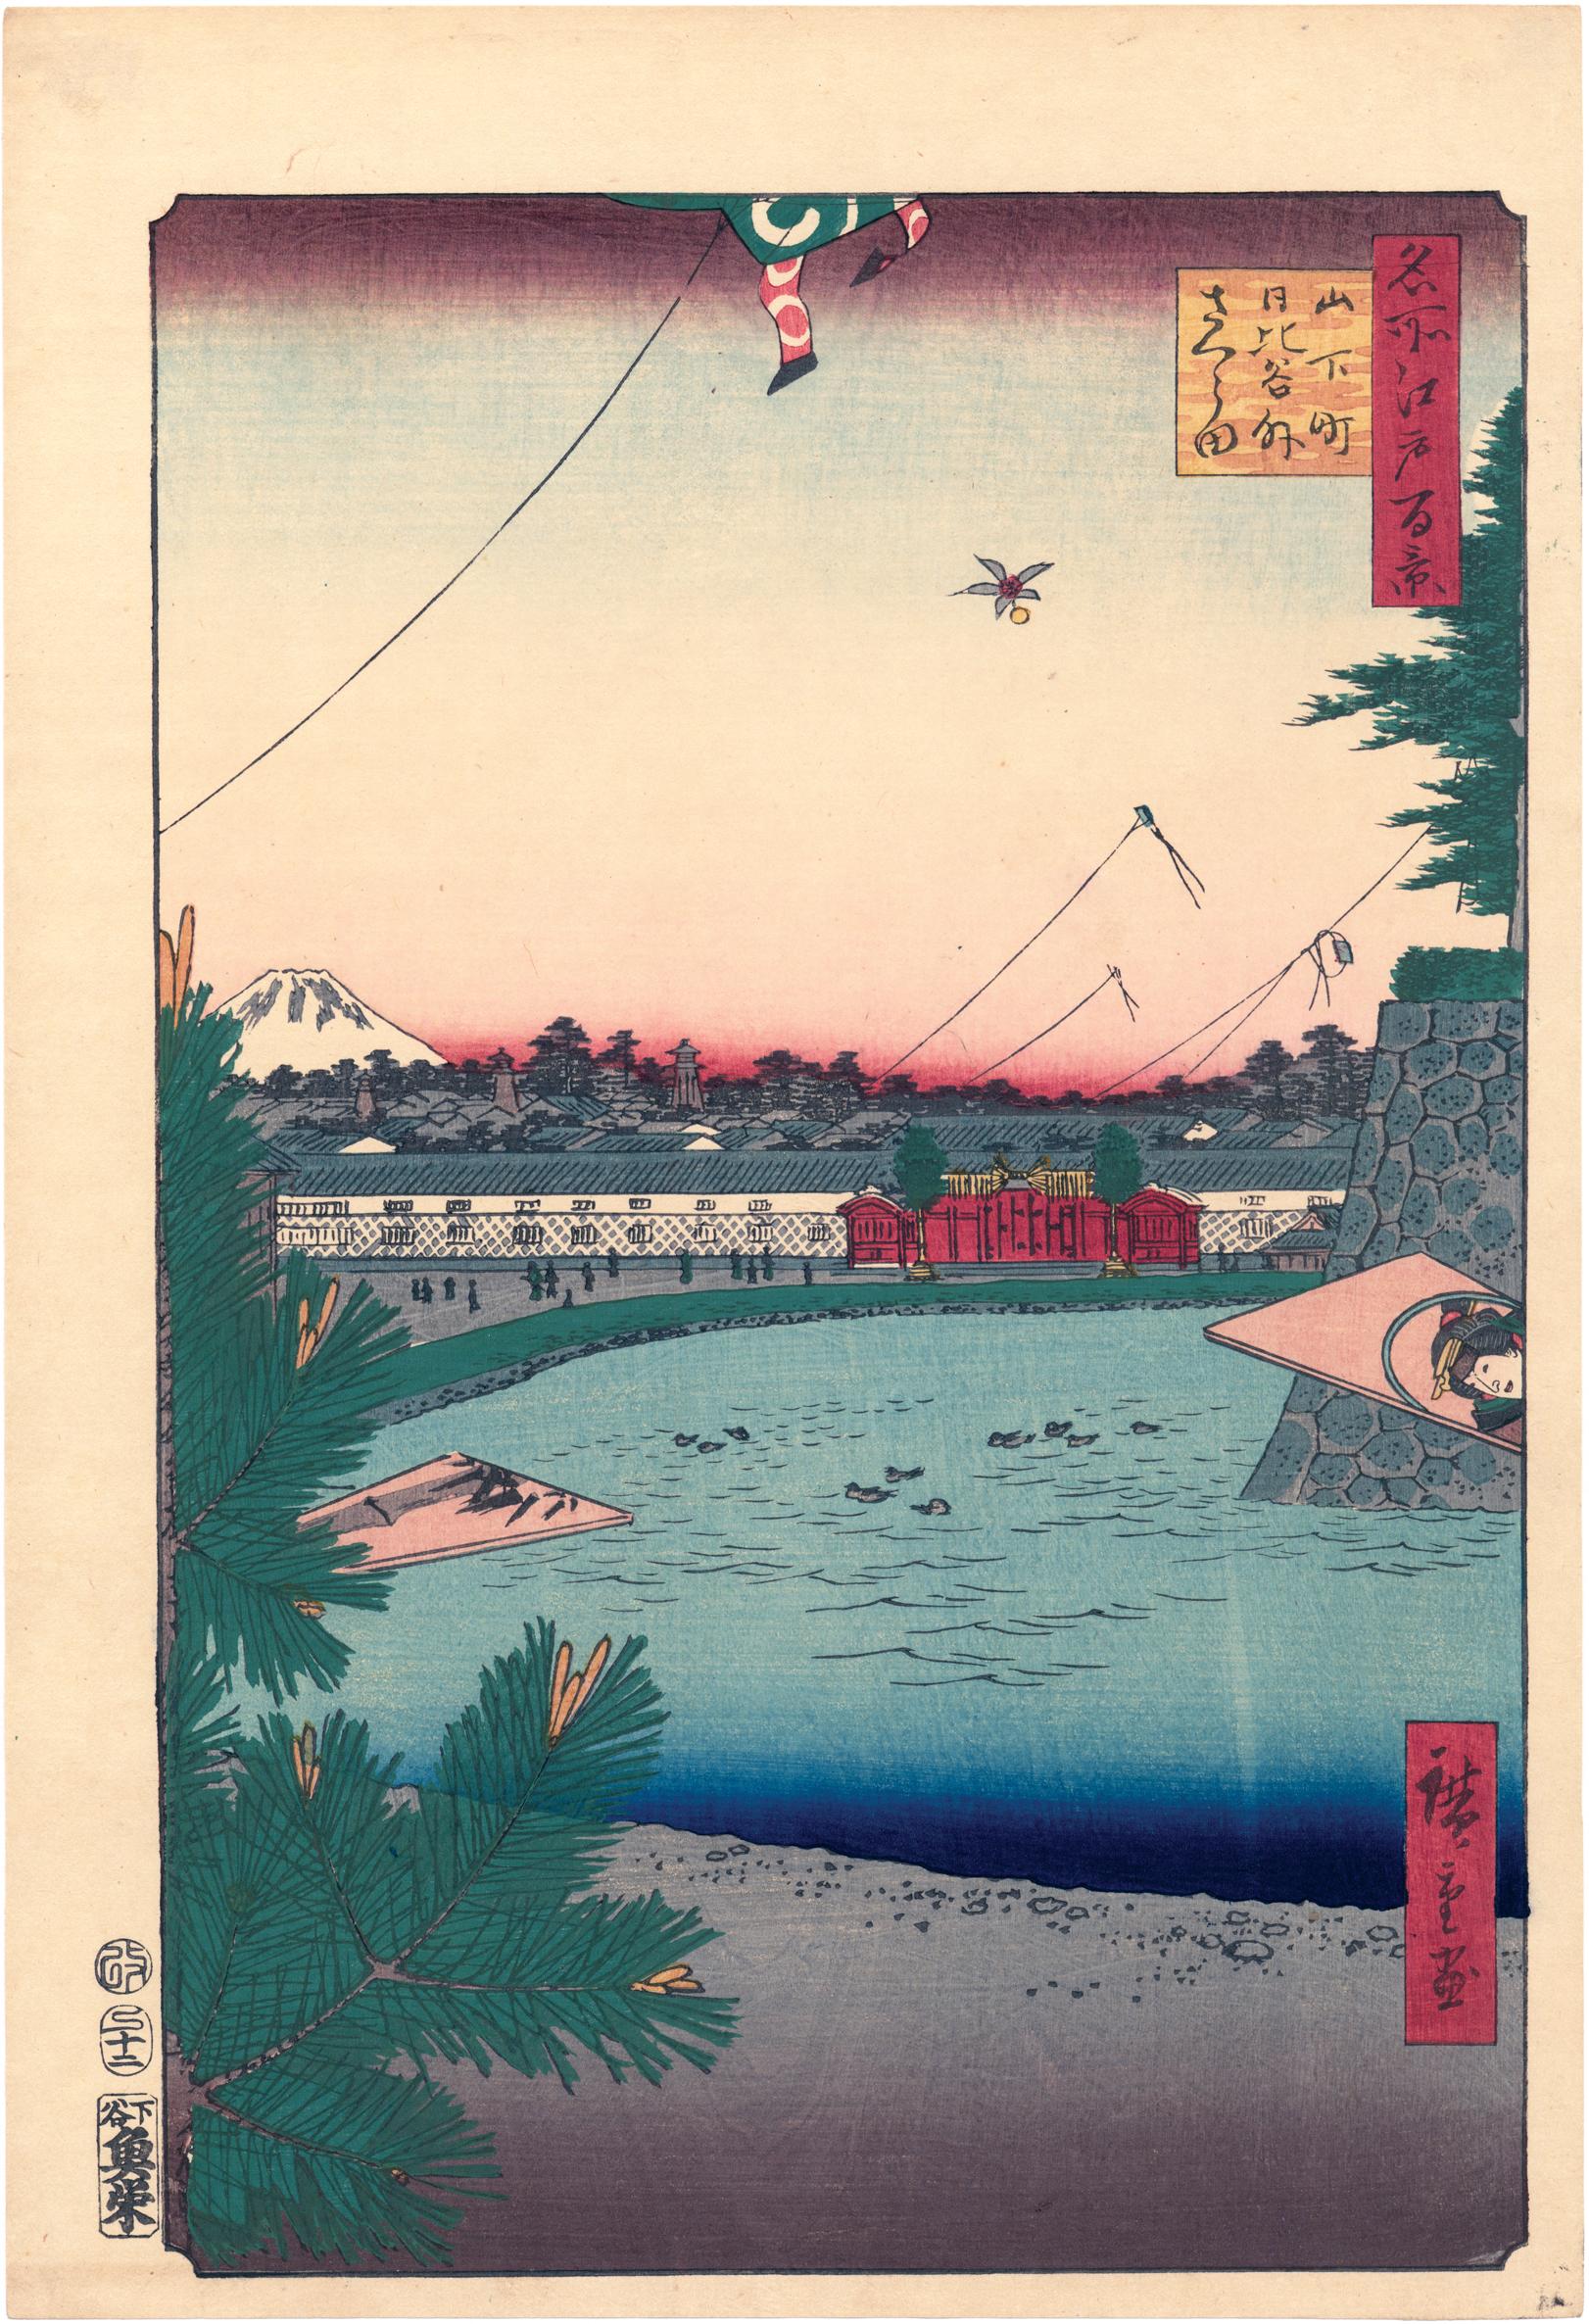 Hibiya and Soto-Sakurada from Yamashita-chô from 100 Views of Edo